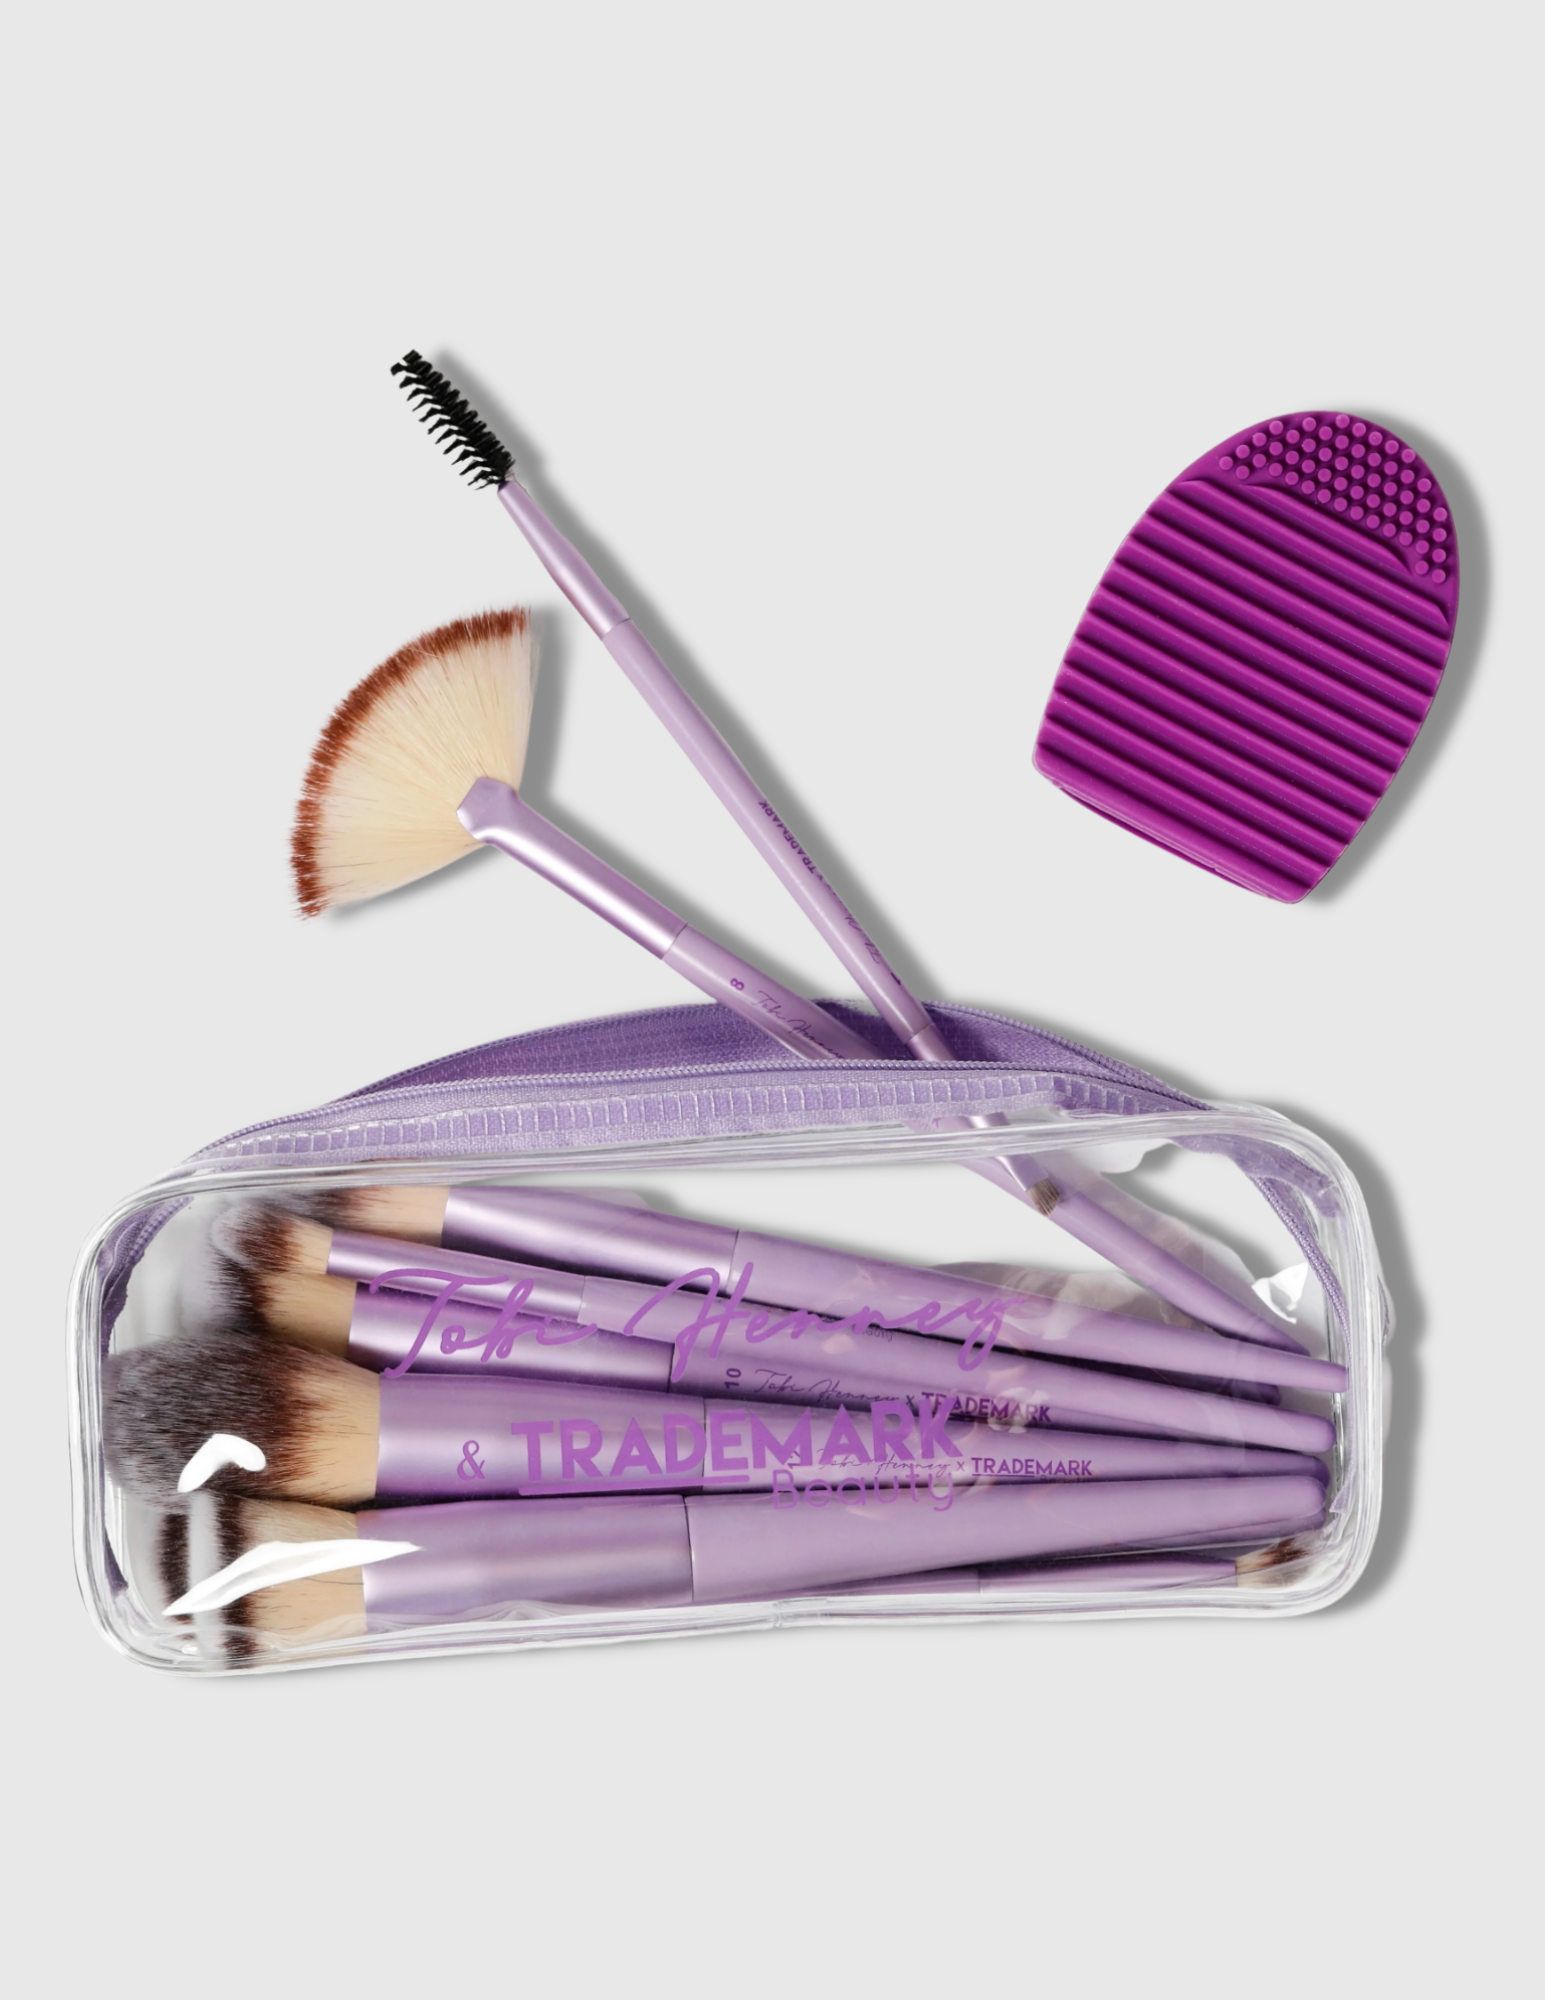 Foundation Makeup Brush - #11 - Trademark Beauty